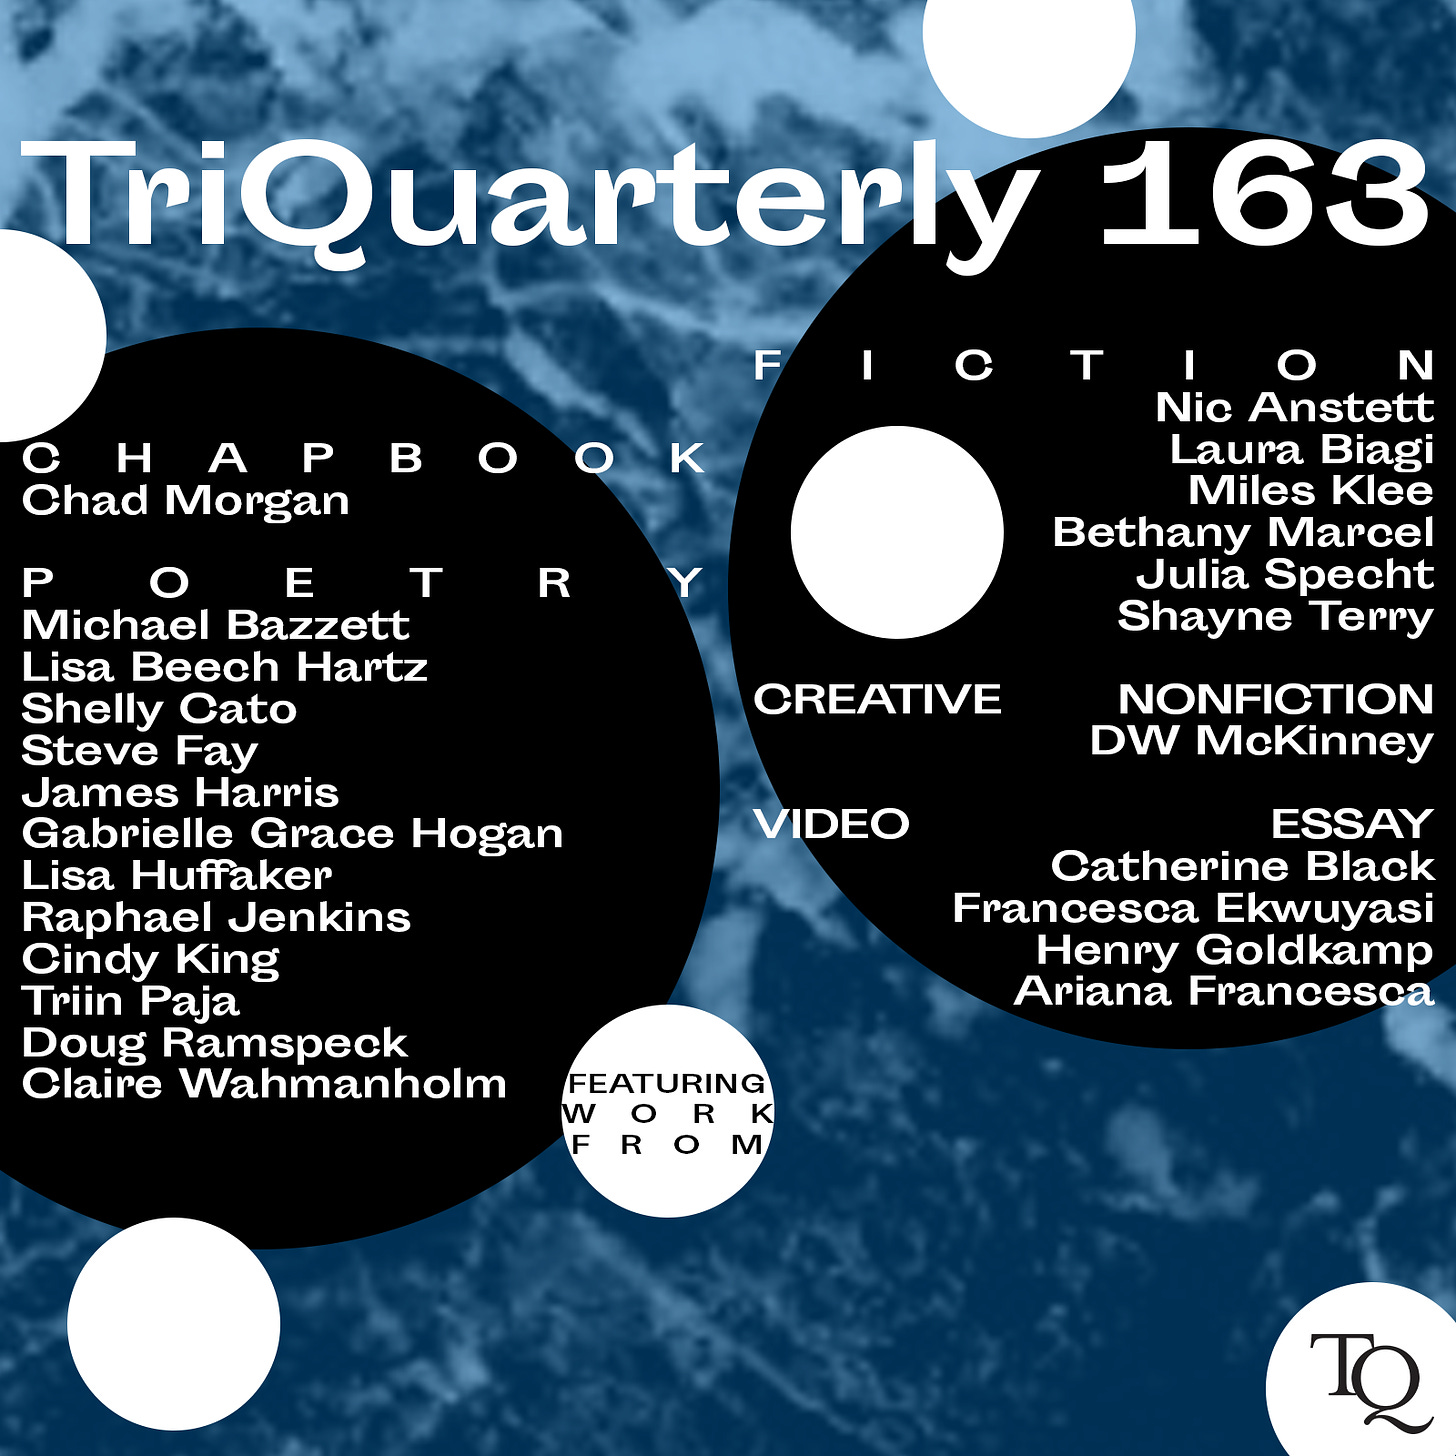 TriQuarterly Magazine Issue 163 Announcement Flier